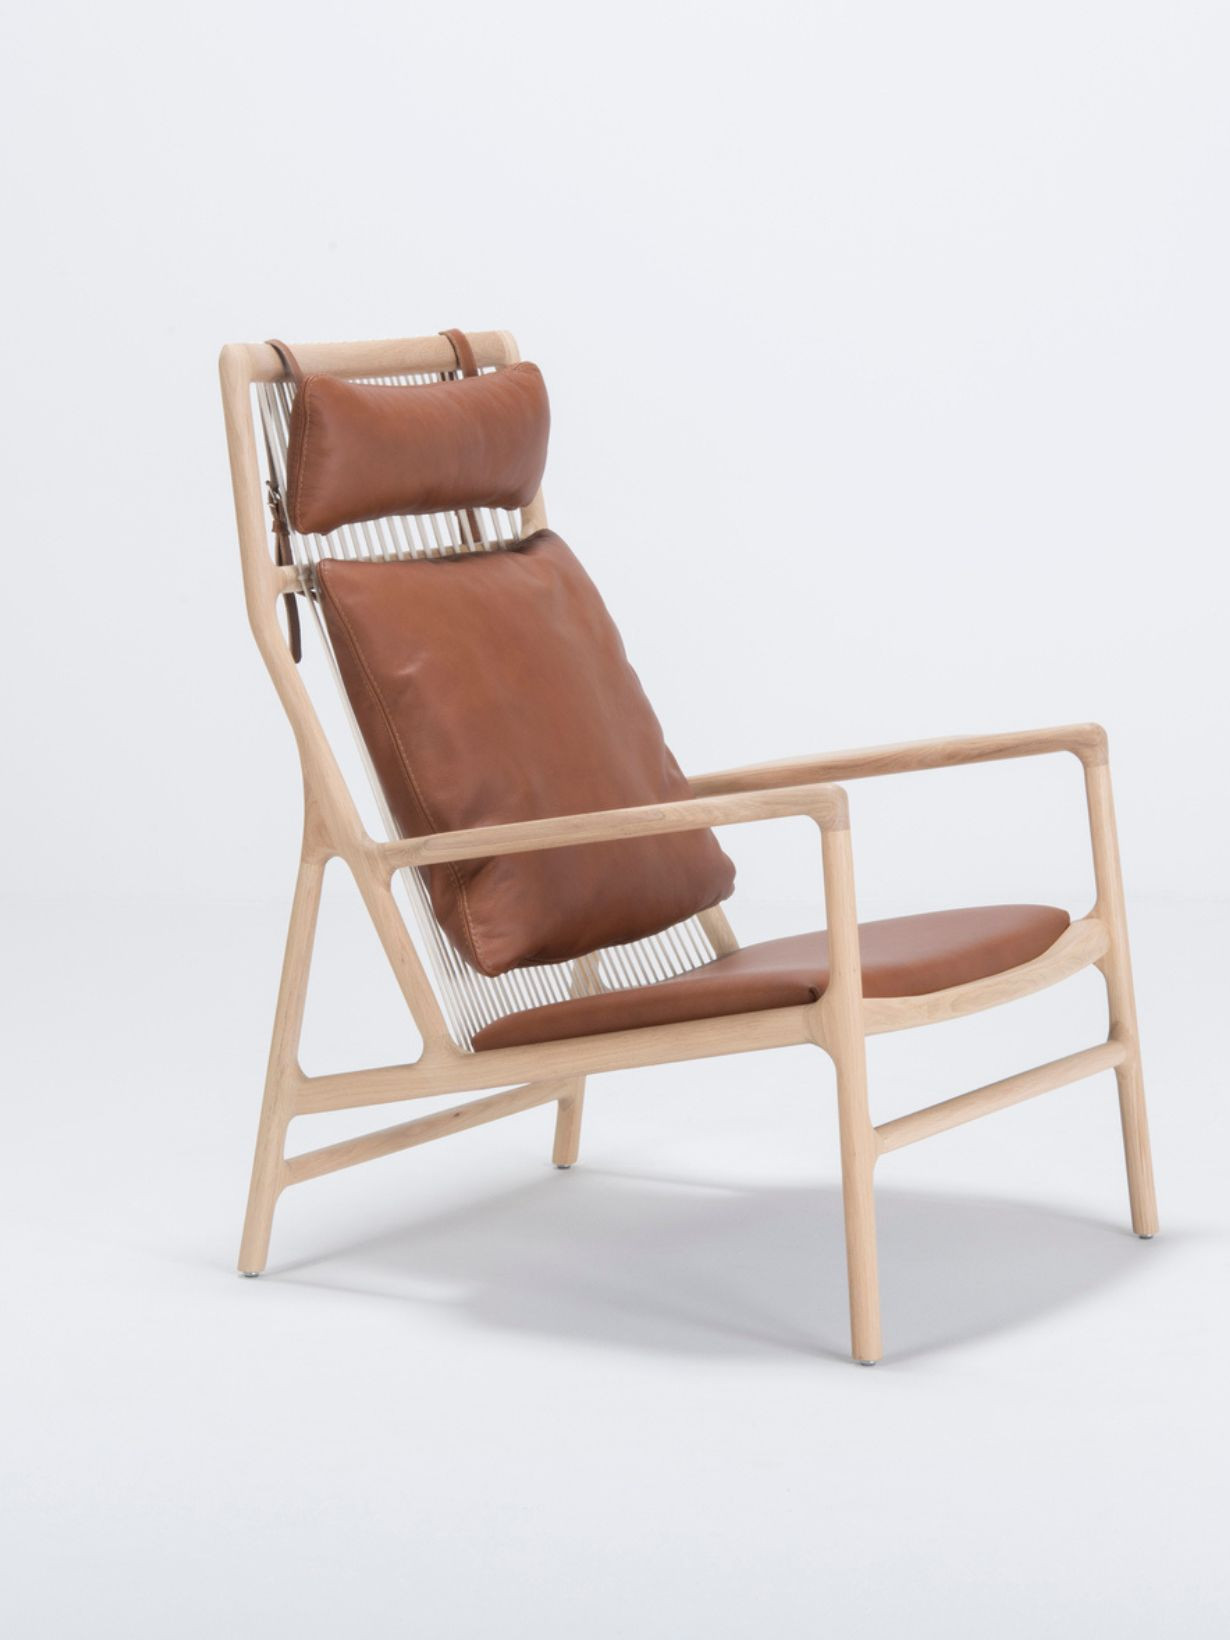 Solid oak chaise longue, leather seat, Dedo